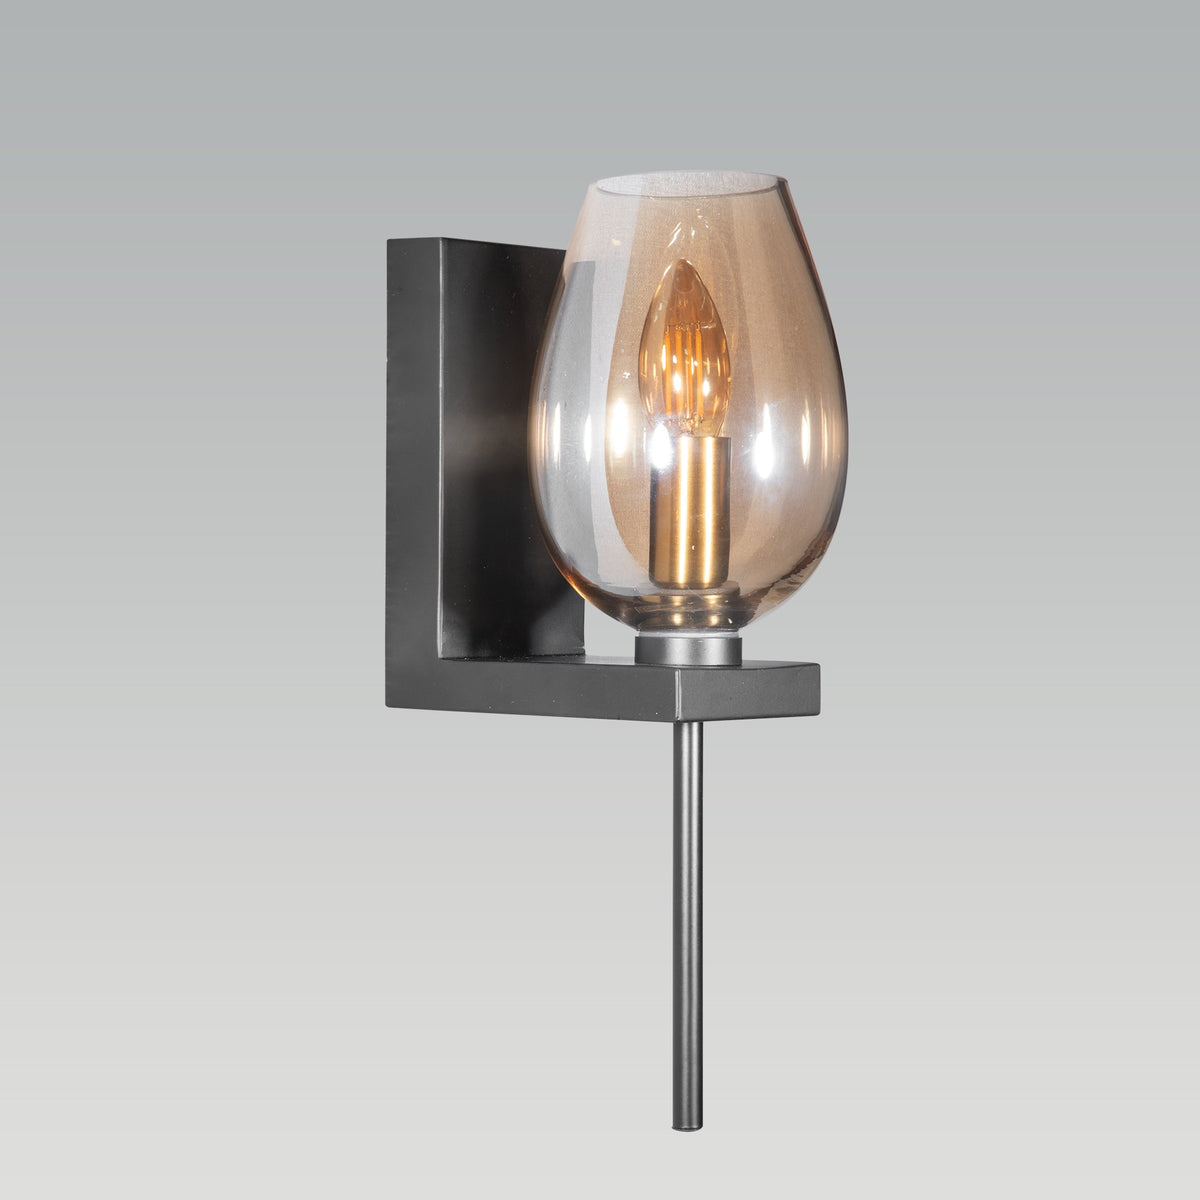 Shop Opera Amber Glass Wall Lamp online